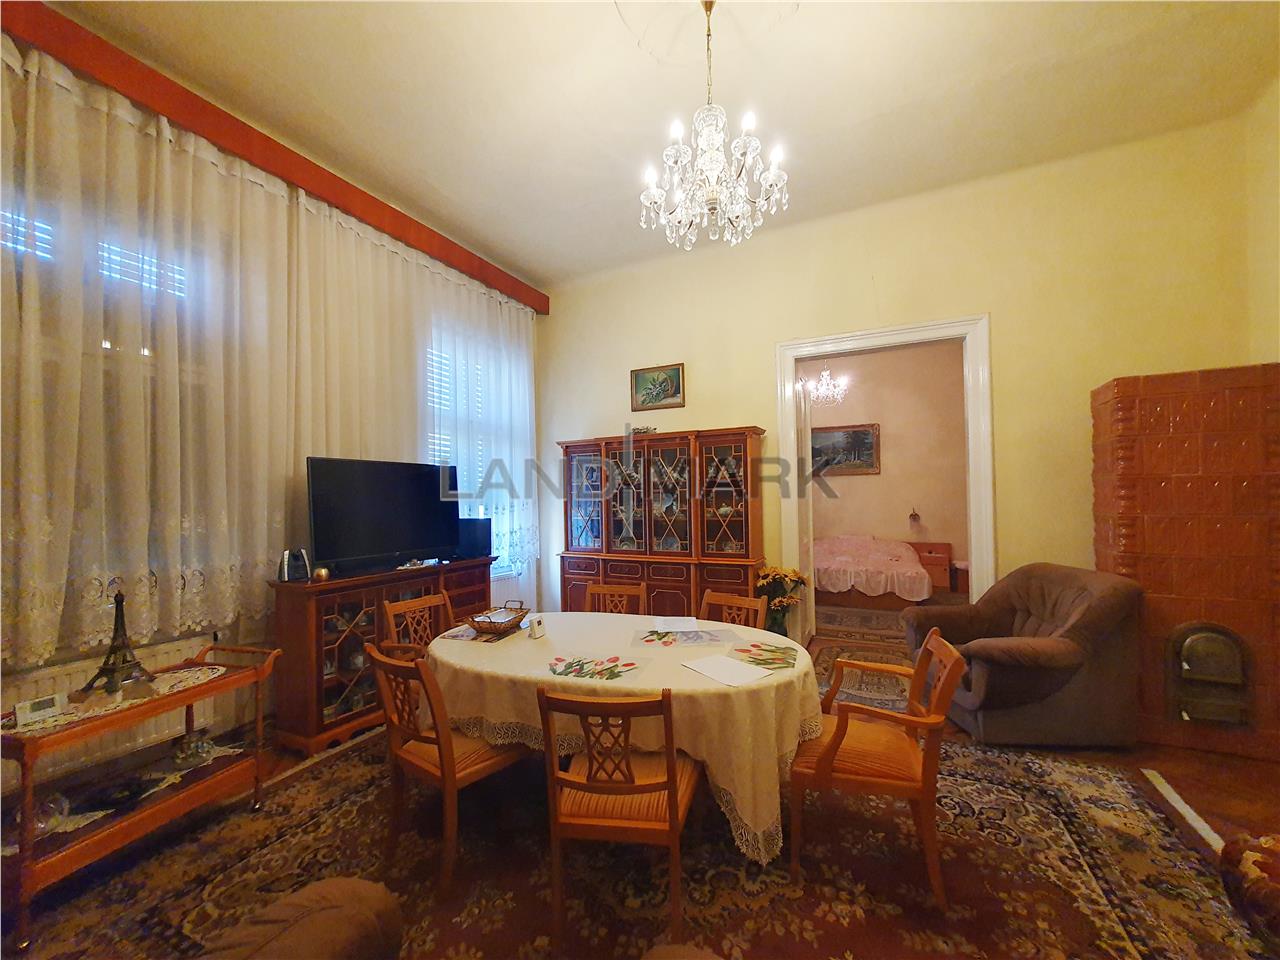 Apartament cu 3 camere,et 1 in cladire istorica zona centrala/Balcescu